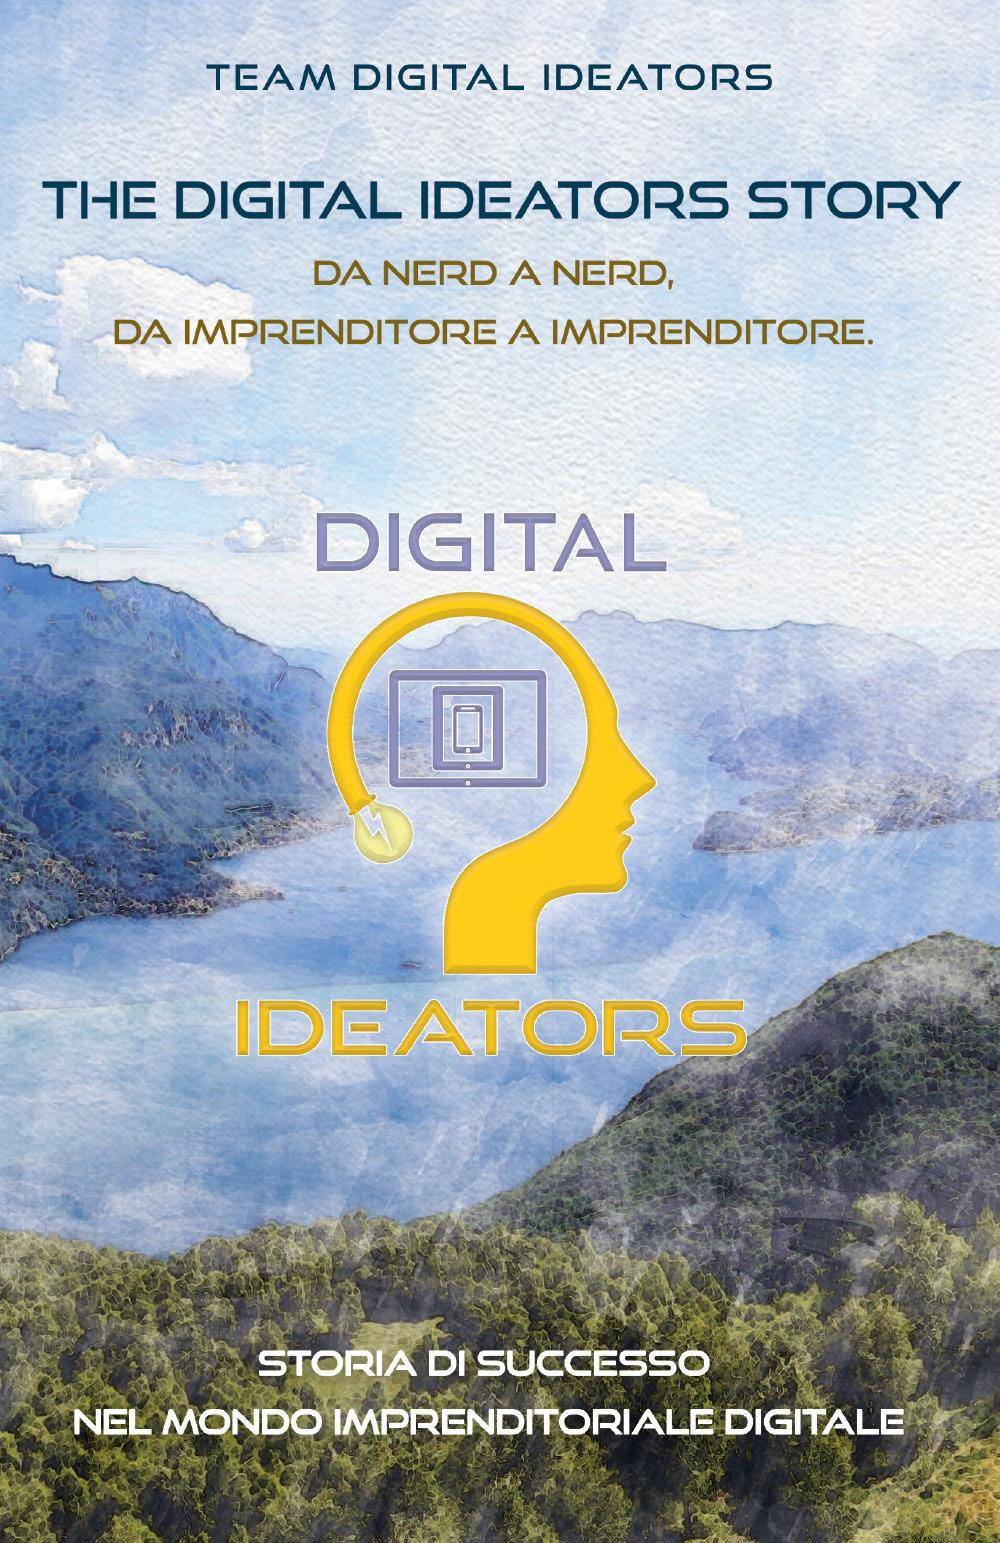 The digital ideators story. Da nerd a nerd, da imprenditore a imprenditore. Storia di successo nel mondo imprenditoriale digitale. Nuova ediz.